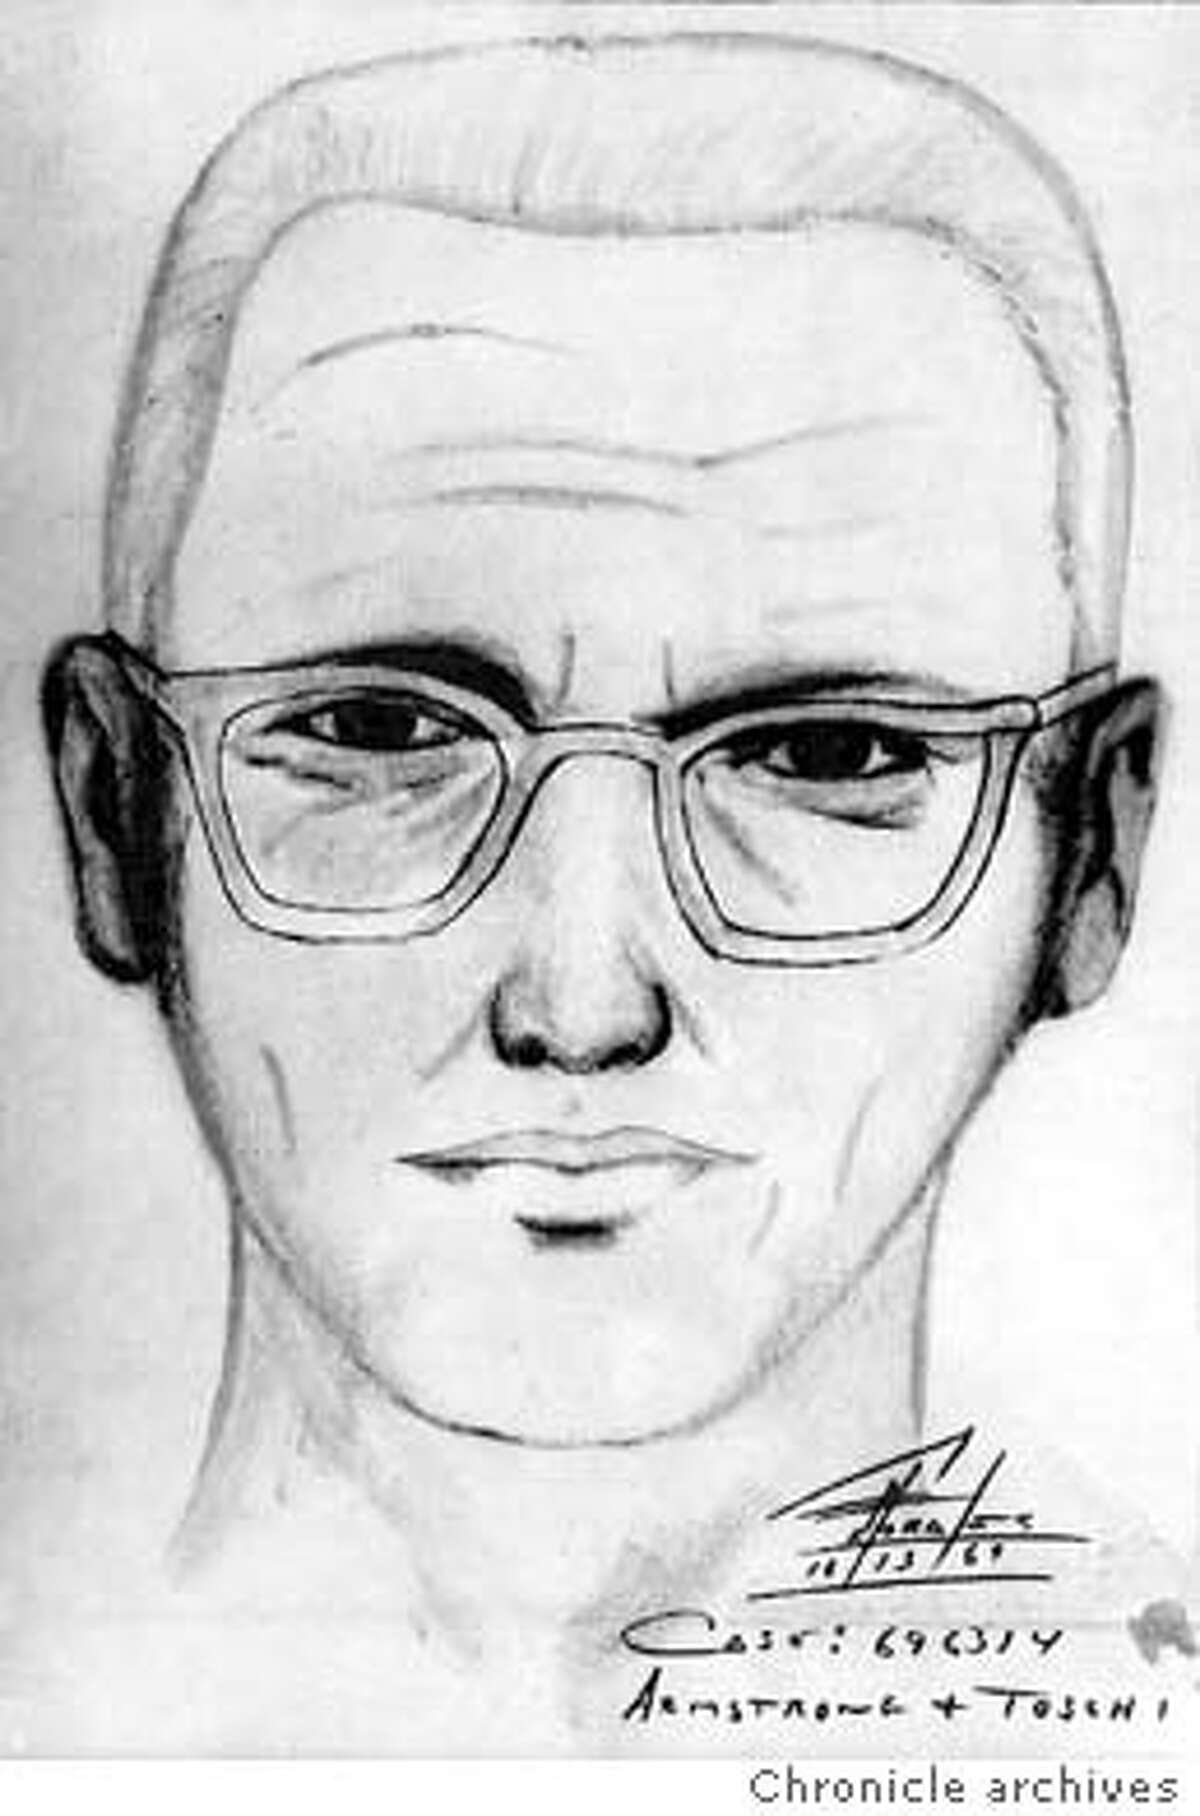 ZODIAC-C-14DEC99-SC-HO--Police sketch of the man suspected of being the "Zodiak Killer," 1969.